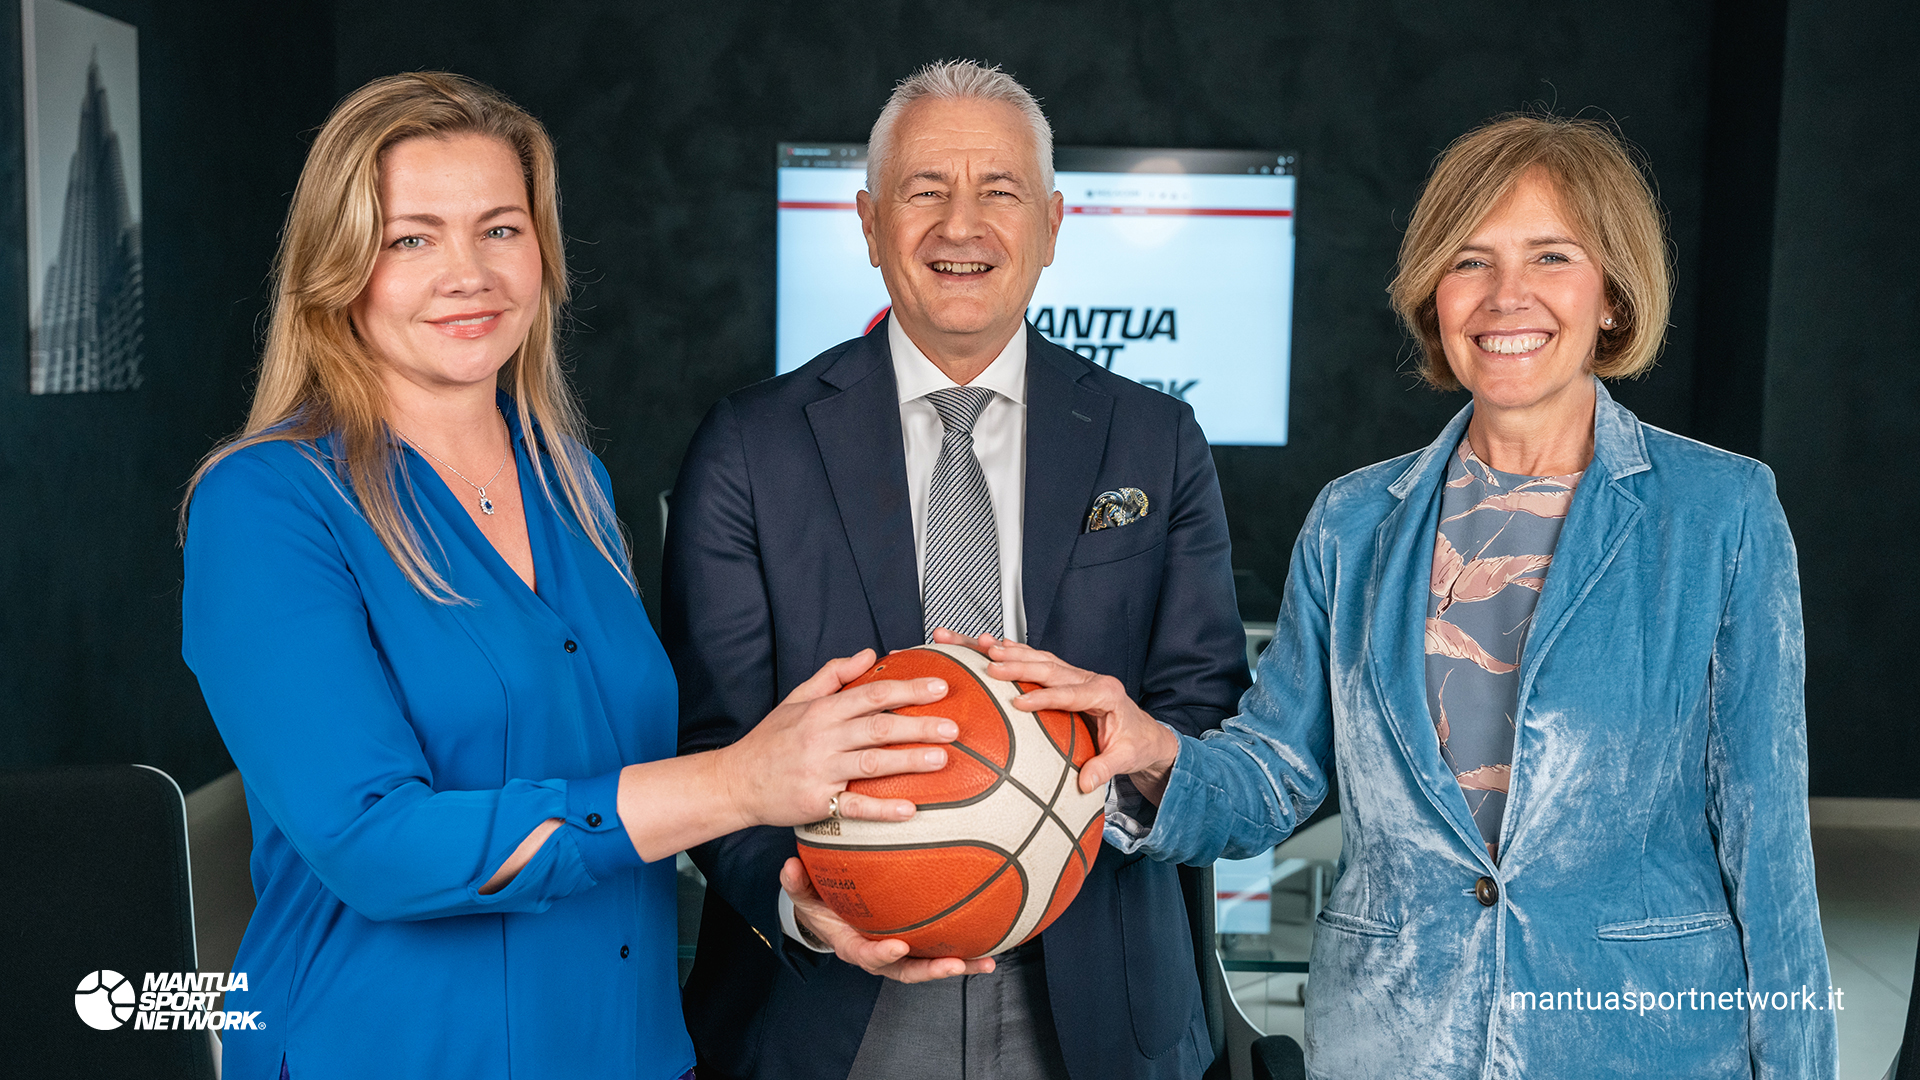 Mantua Sport Network - Sport and Business